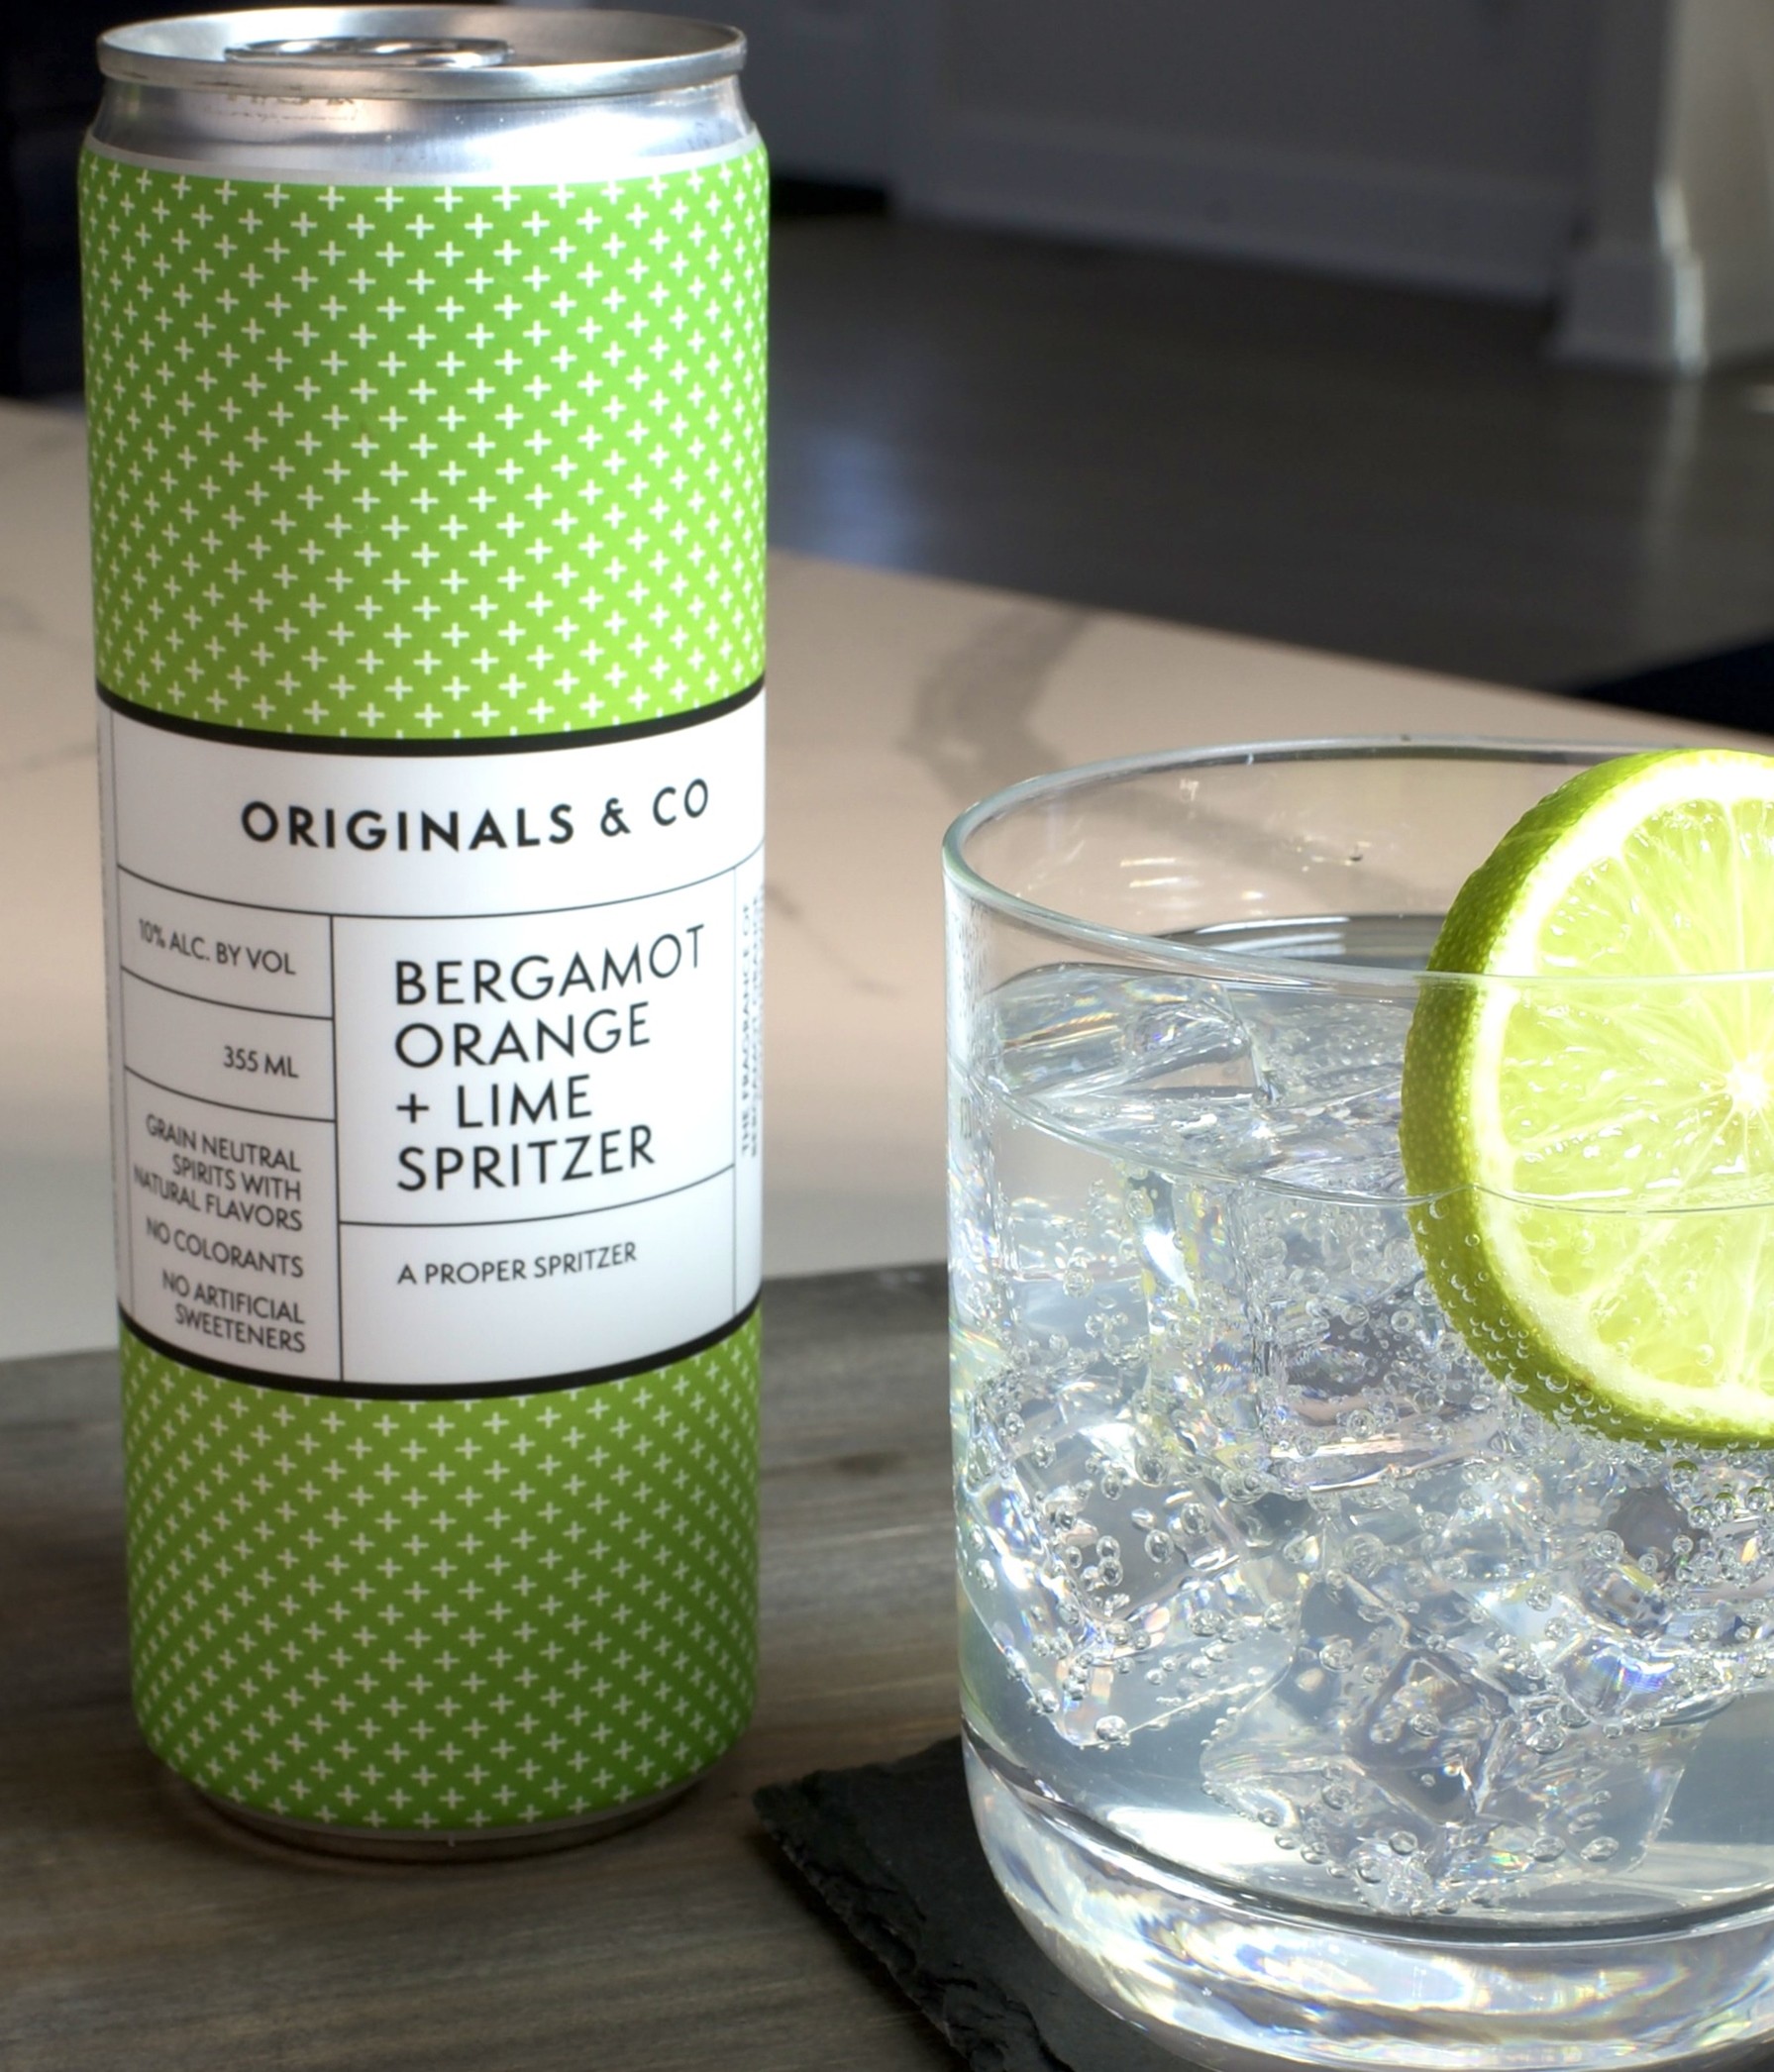 The Must-Try Spritzer: Originals & Co Bergamot + Lime Spritzer